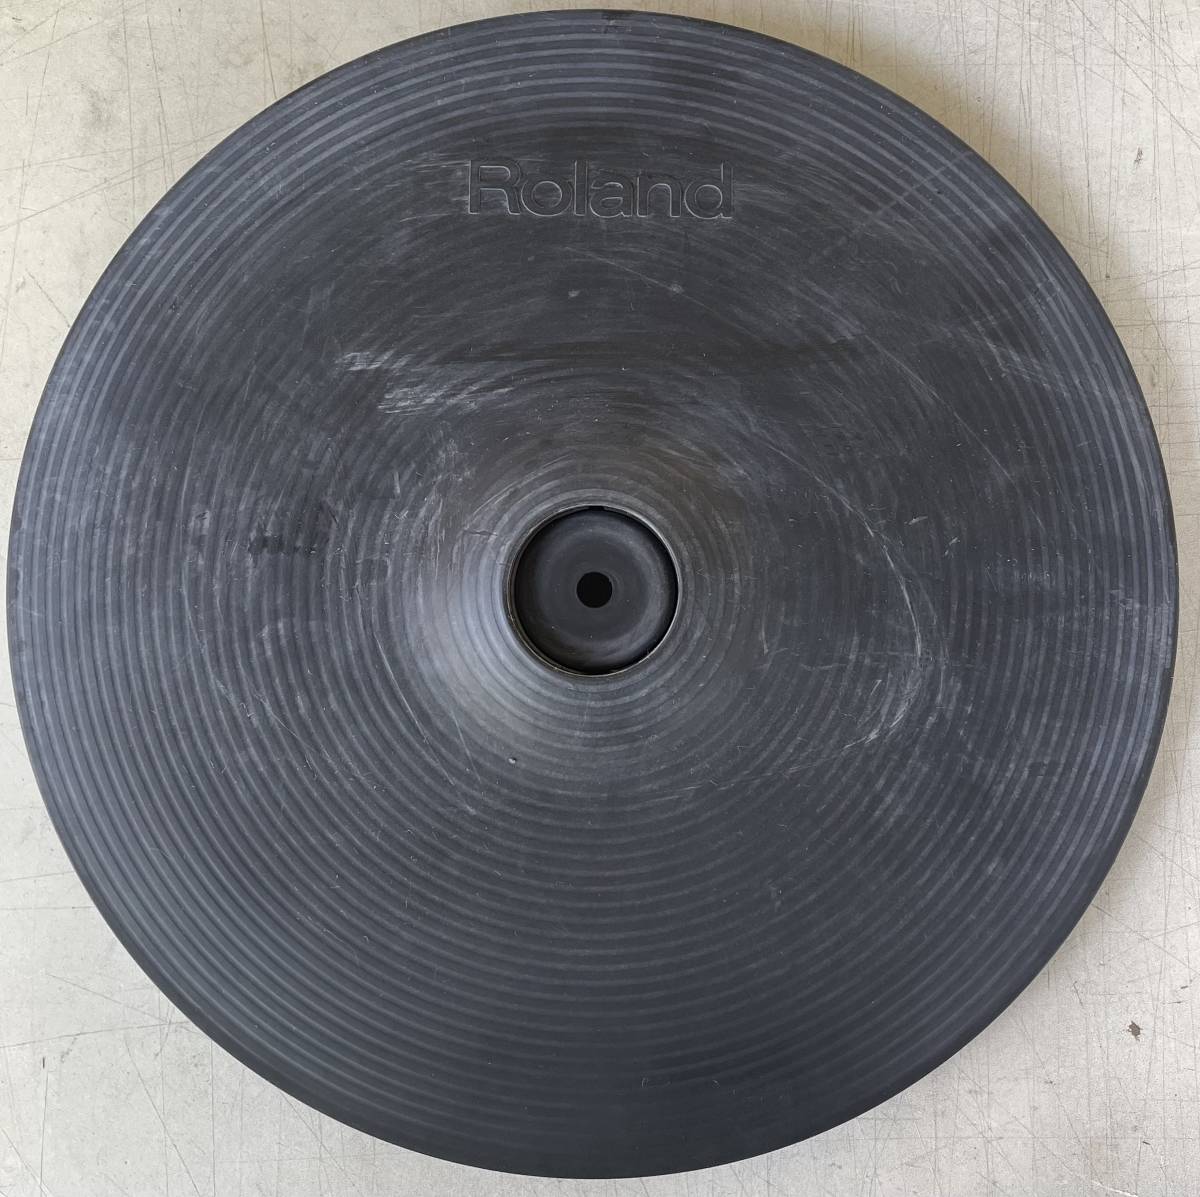 Roland ローランド V-Drums クラッシュ CY-12C Vドラム 電子ドラム